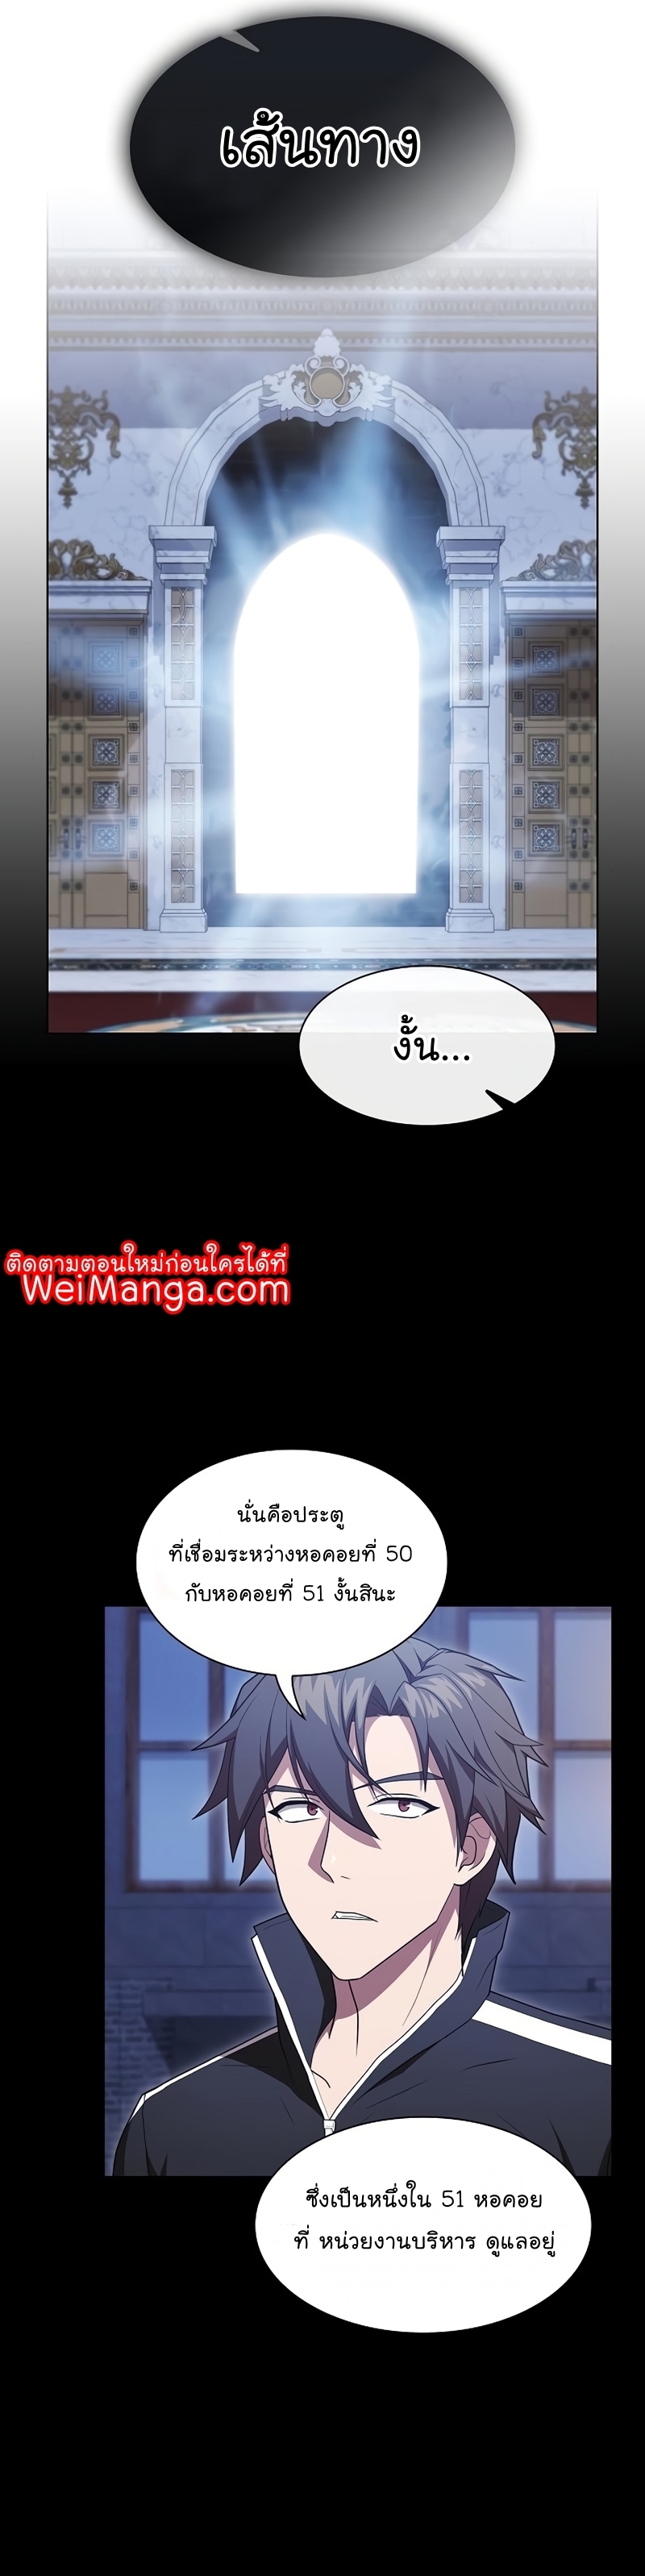 The Tutorial Towel Manga Manhwa Wei 163 (20)